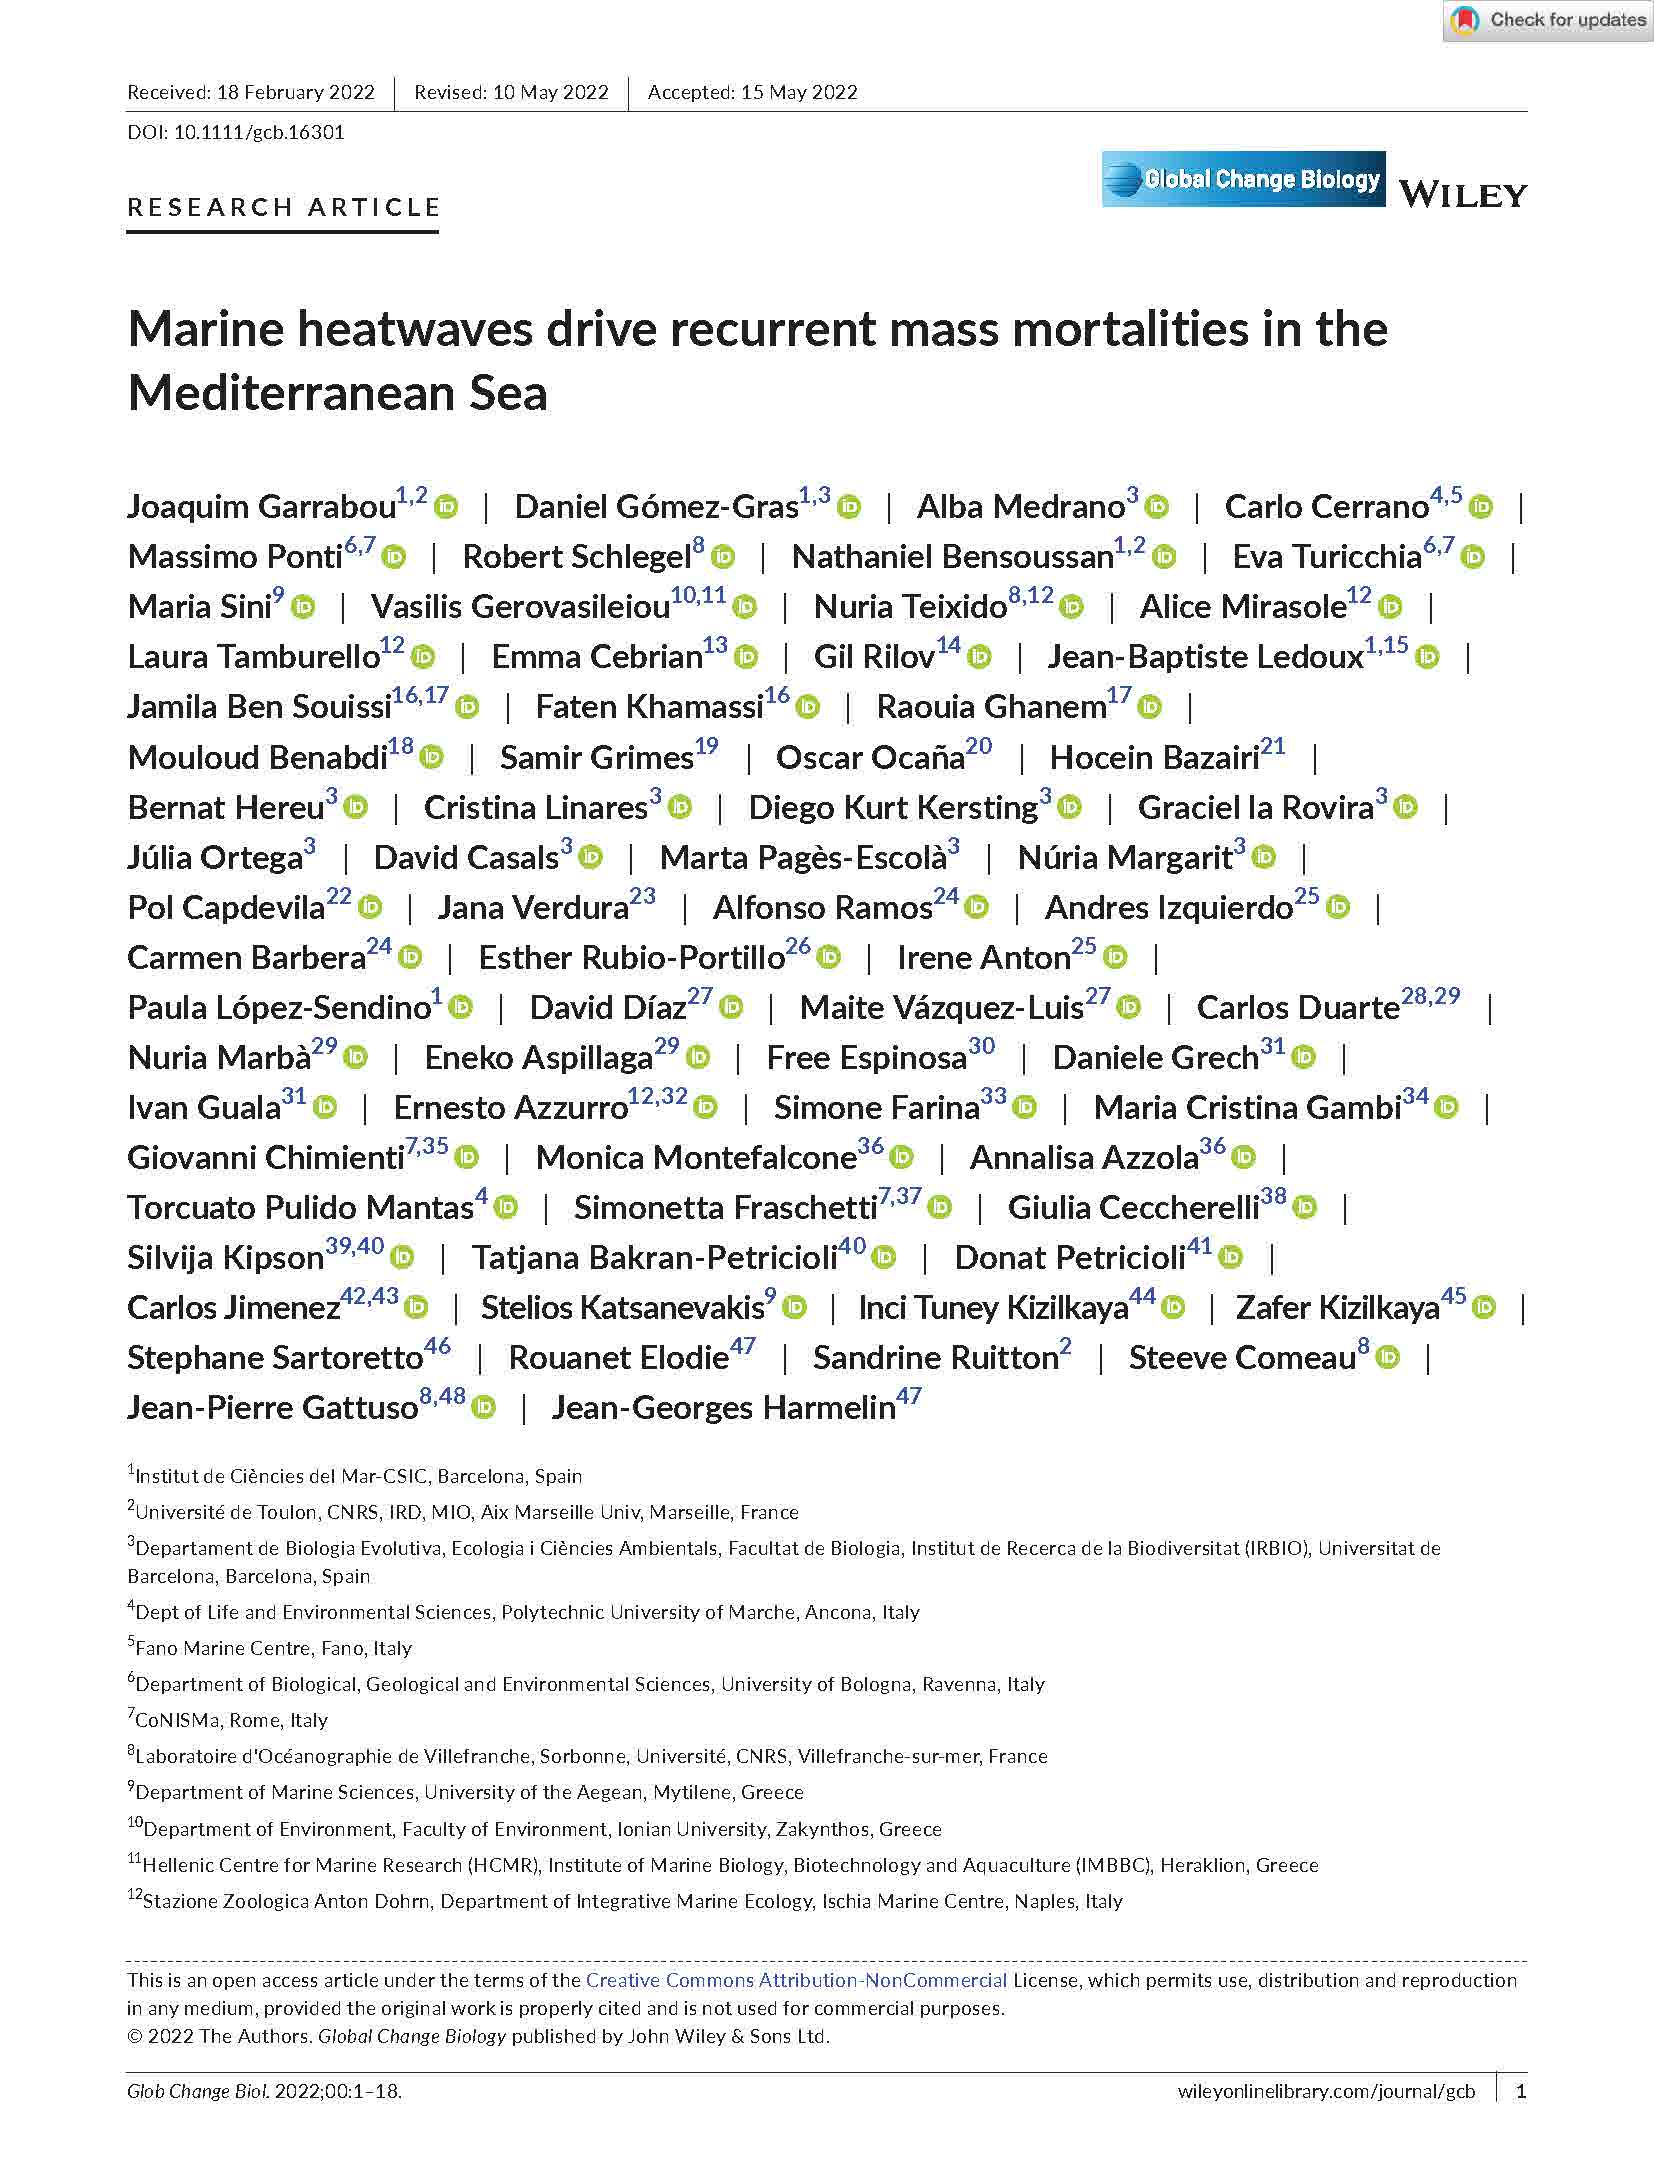 Garrabou et al 2022 Marine heatwaves drive recurrent mass mortalities in the Mediterranean Sea Global Change Biology